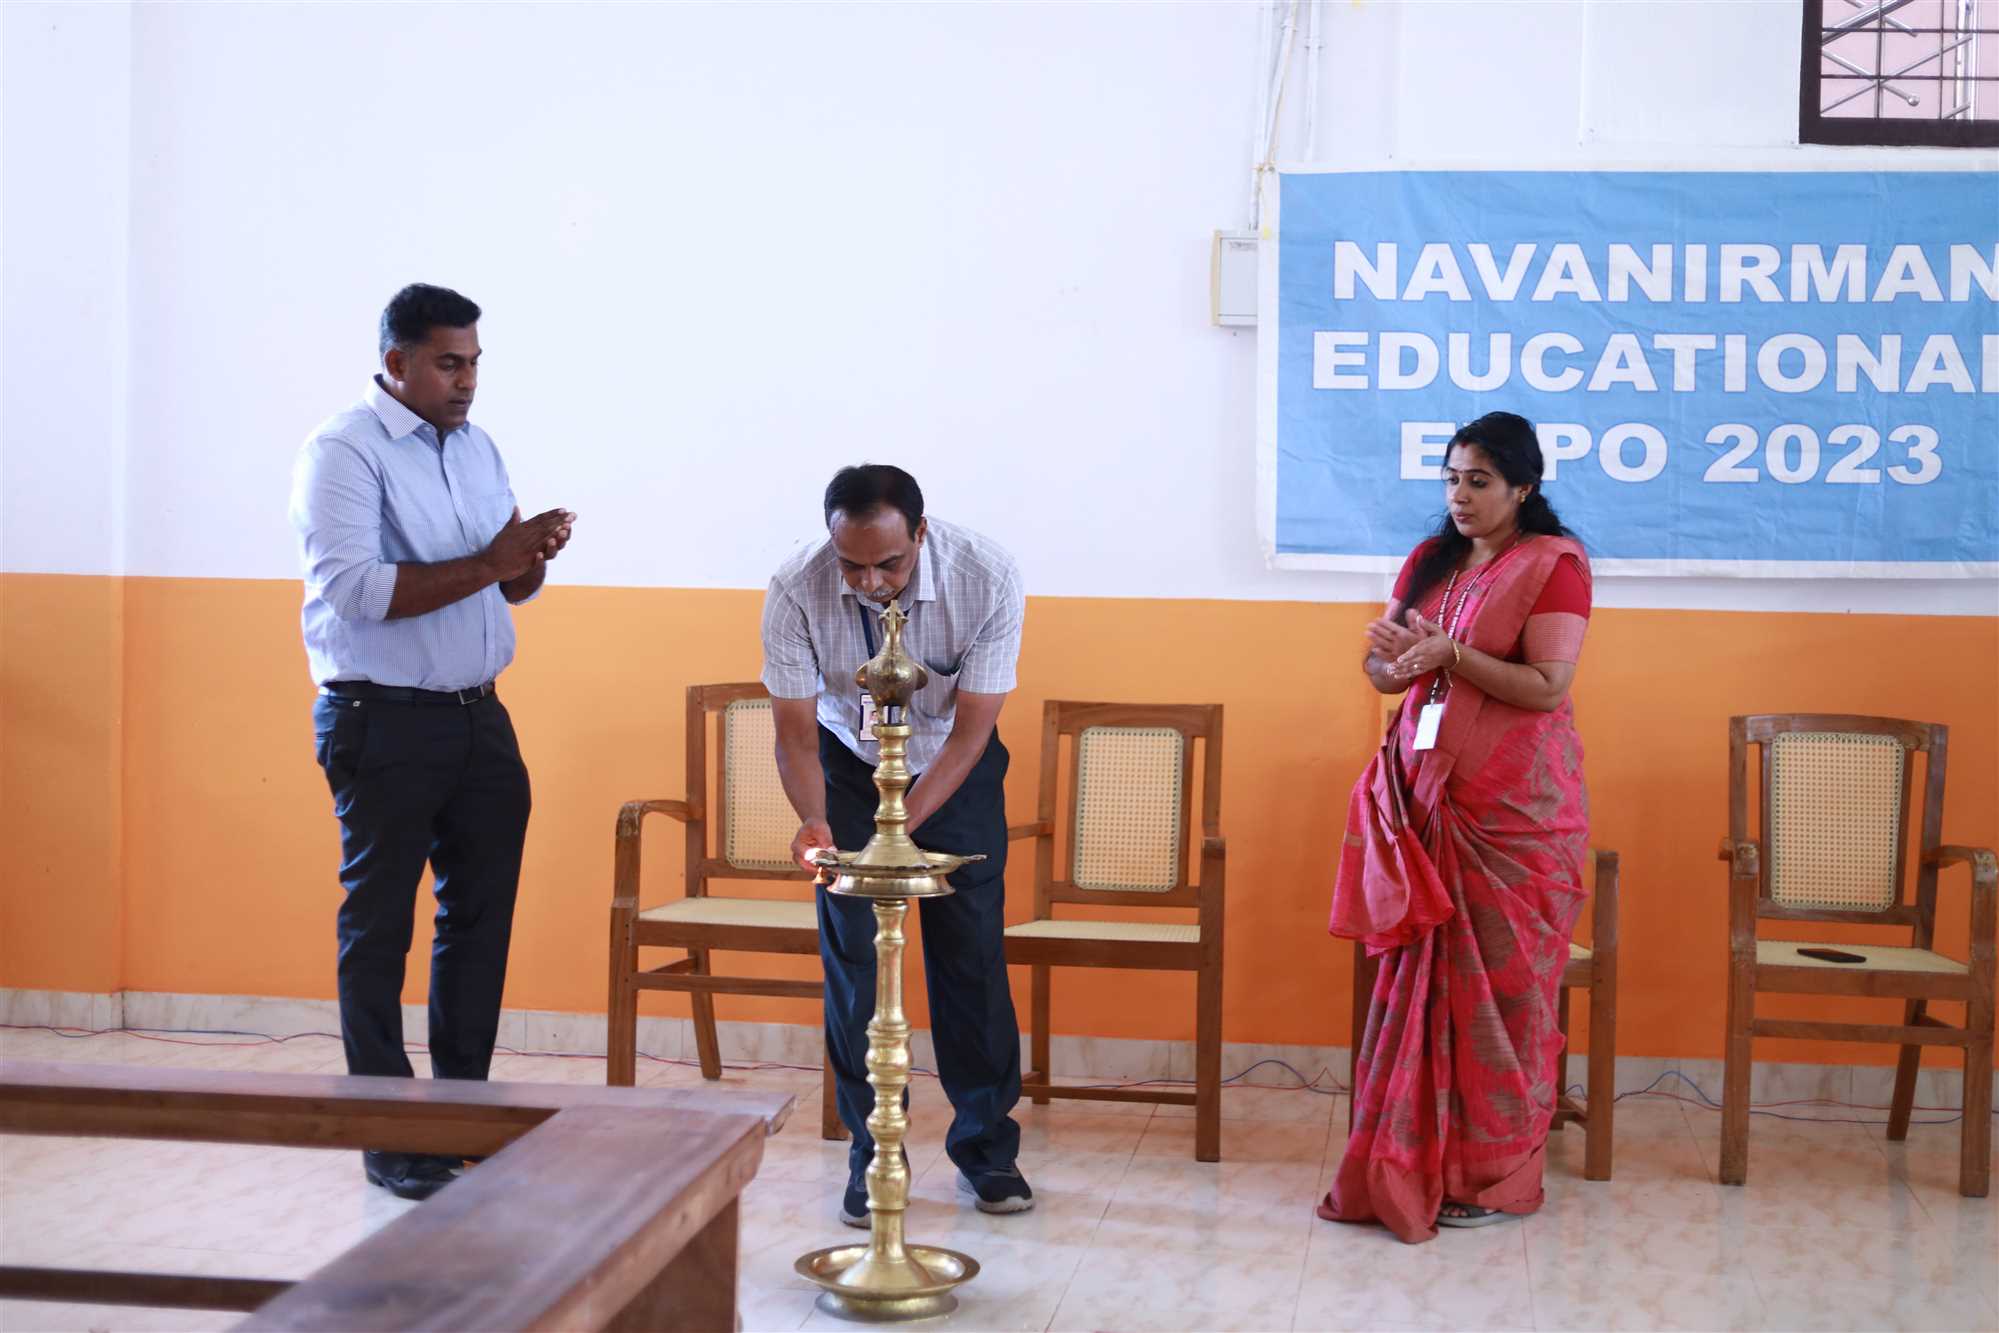 Navanirman Educational Expo 2023